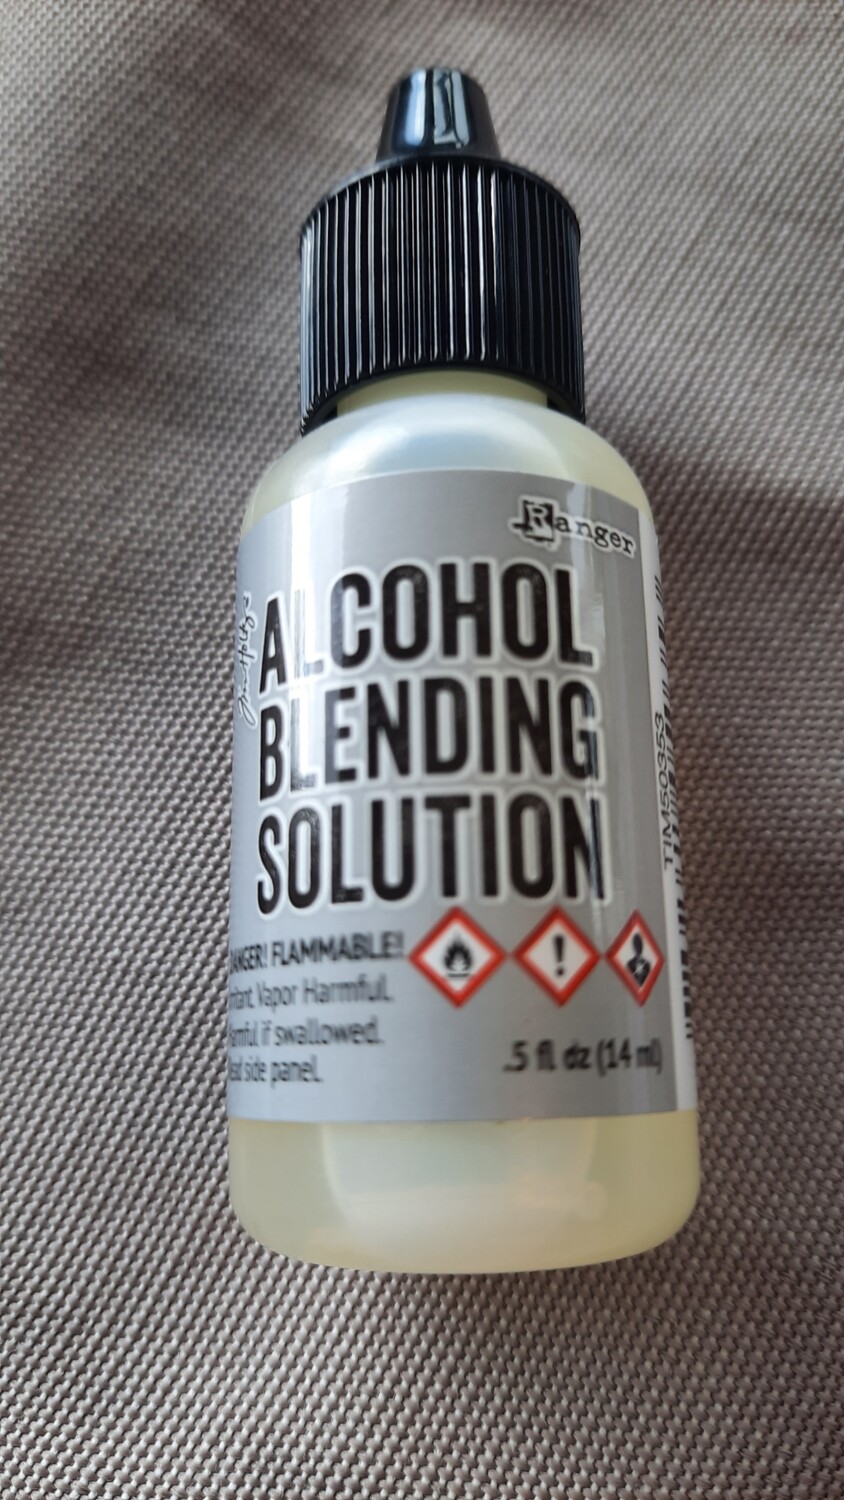 Alcohol blending solution .5floz 